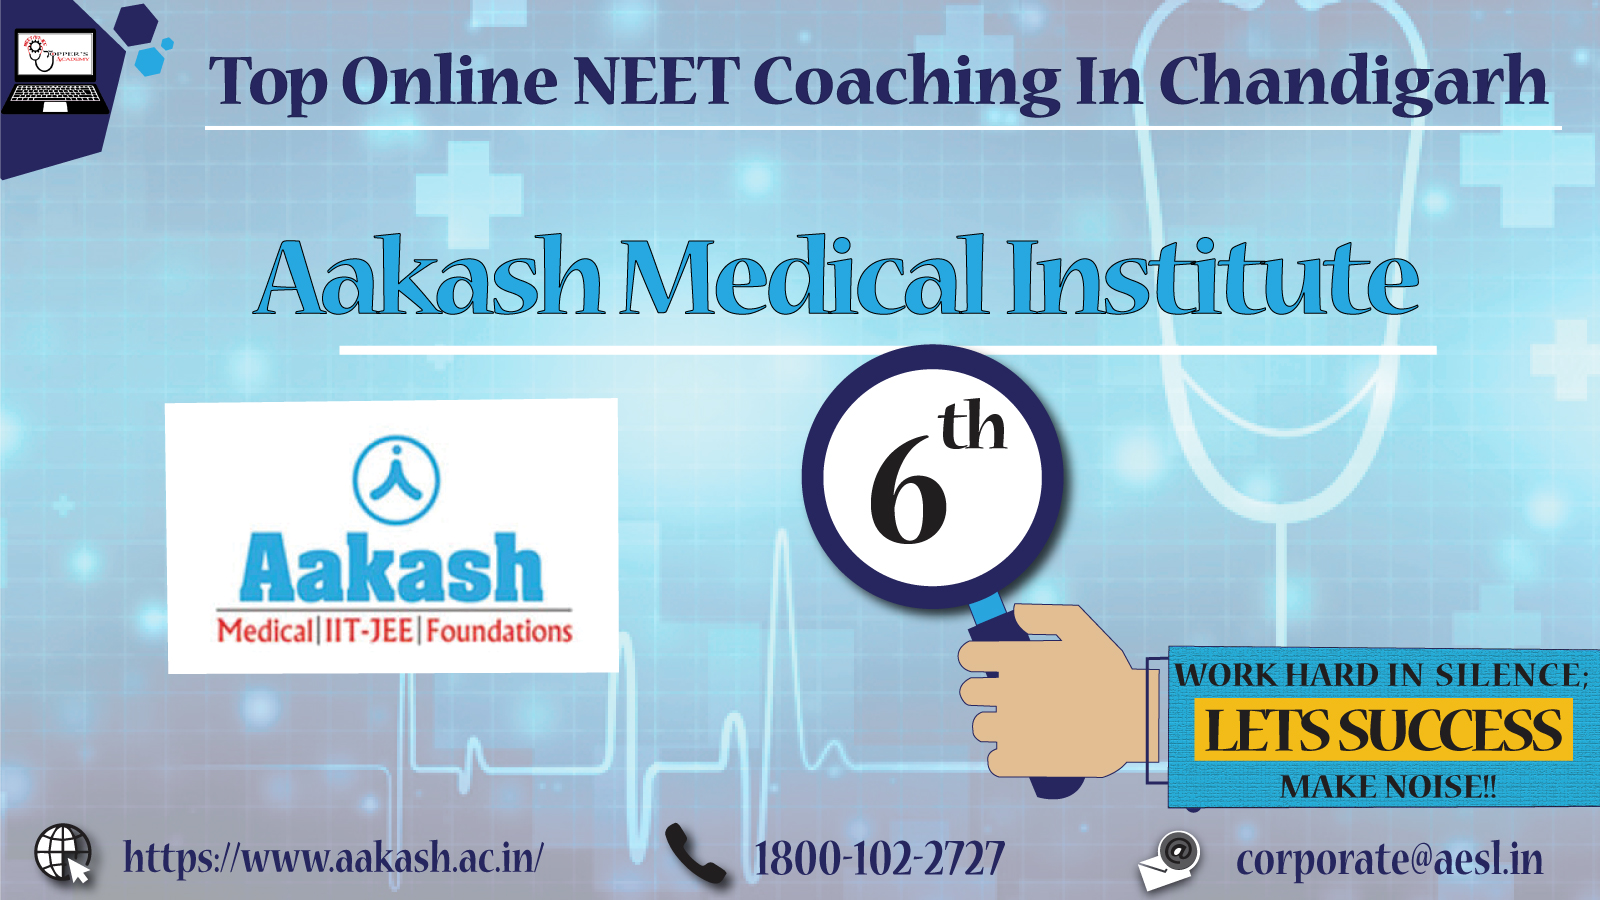 Top Online Coaching Institutes For Neet In chandigarh